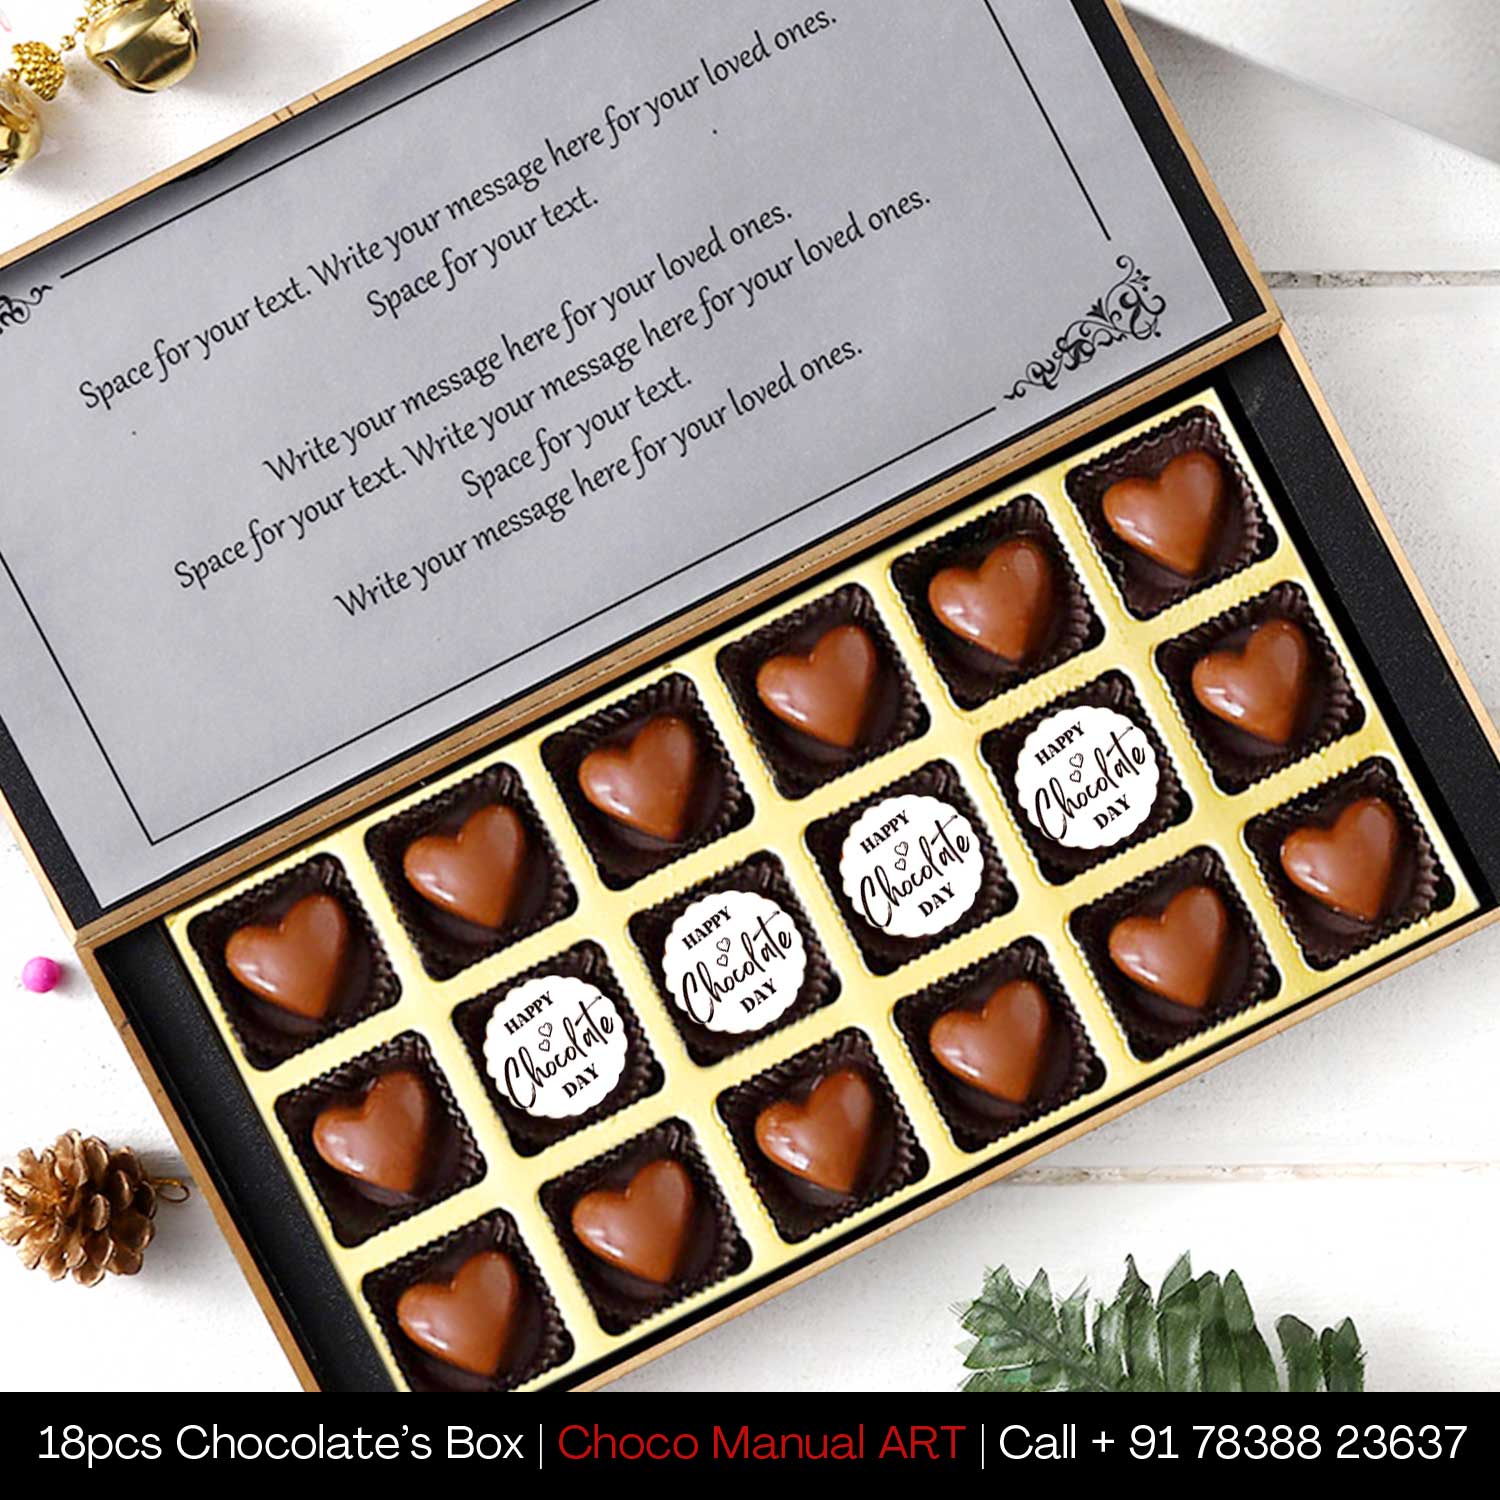 Chocolate Day Personalised Chocolate gift I Buy at Choco ManualART